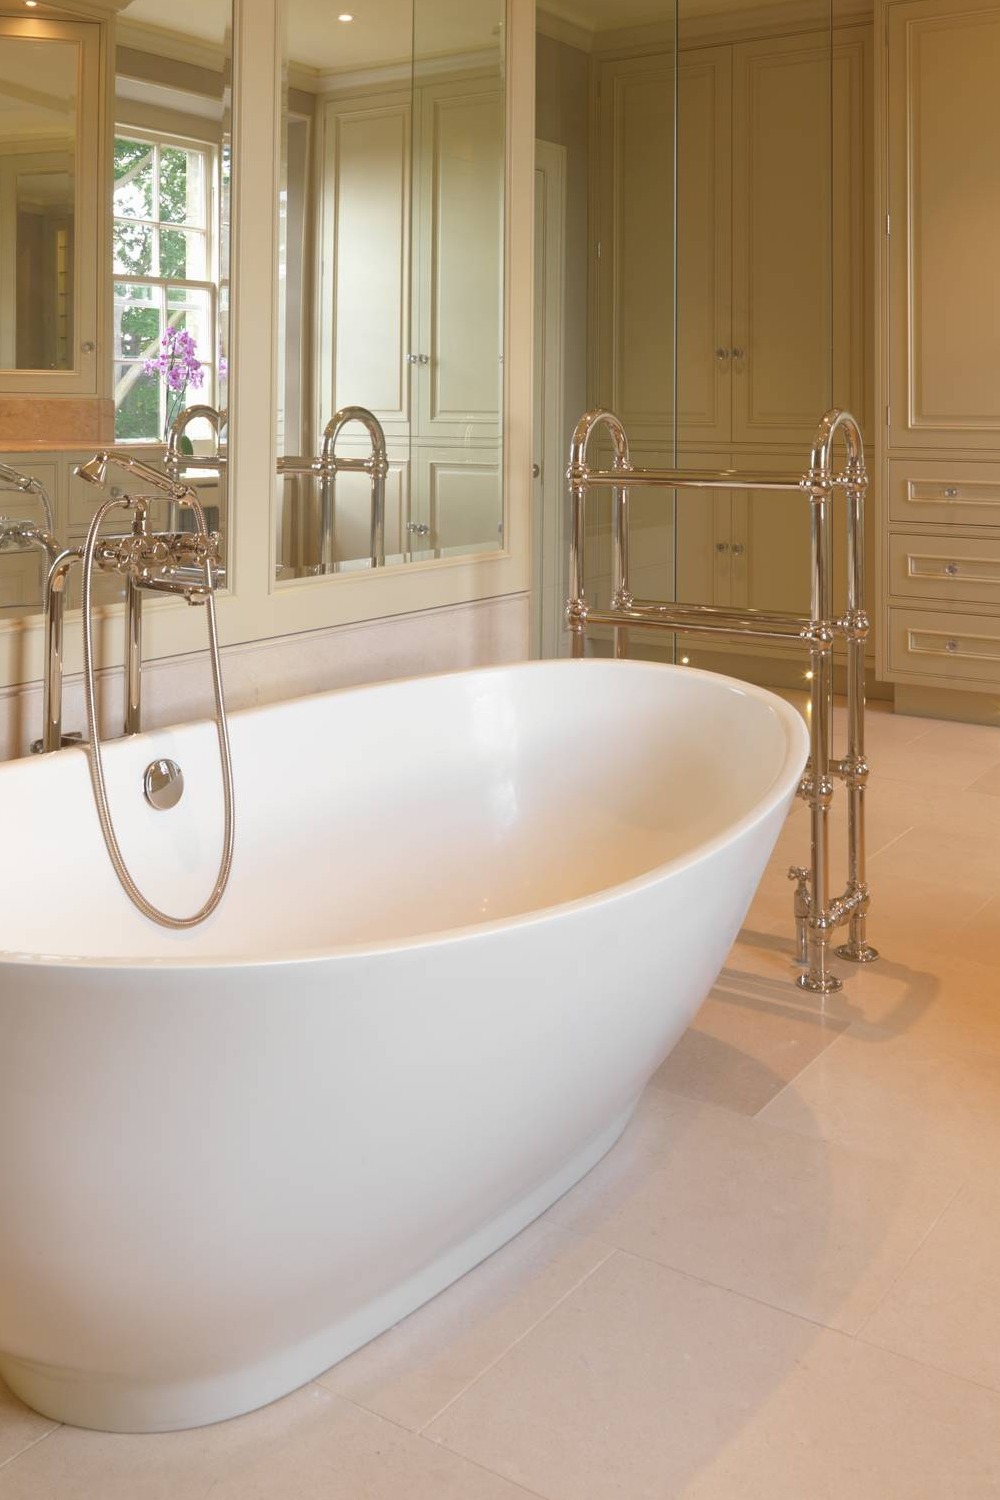 Cream Limestone Floor Tiles Free Standing Bathtub Towel Rack Green Cabinets